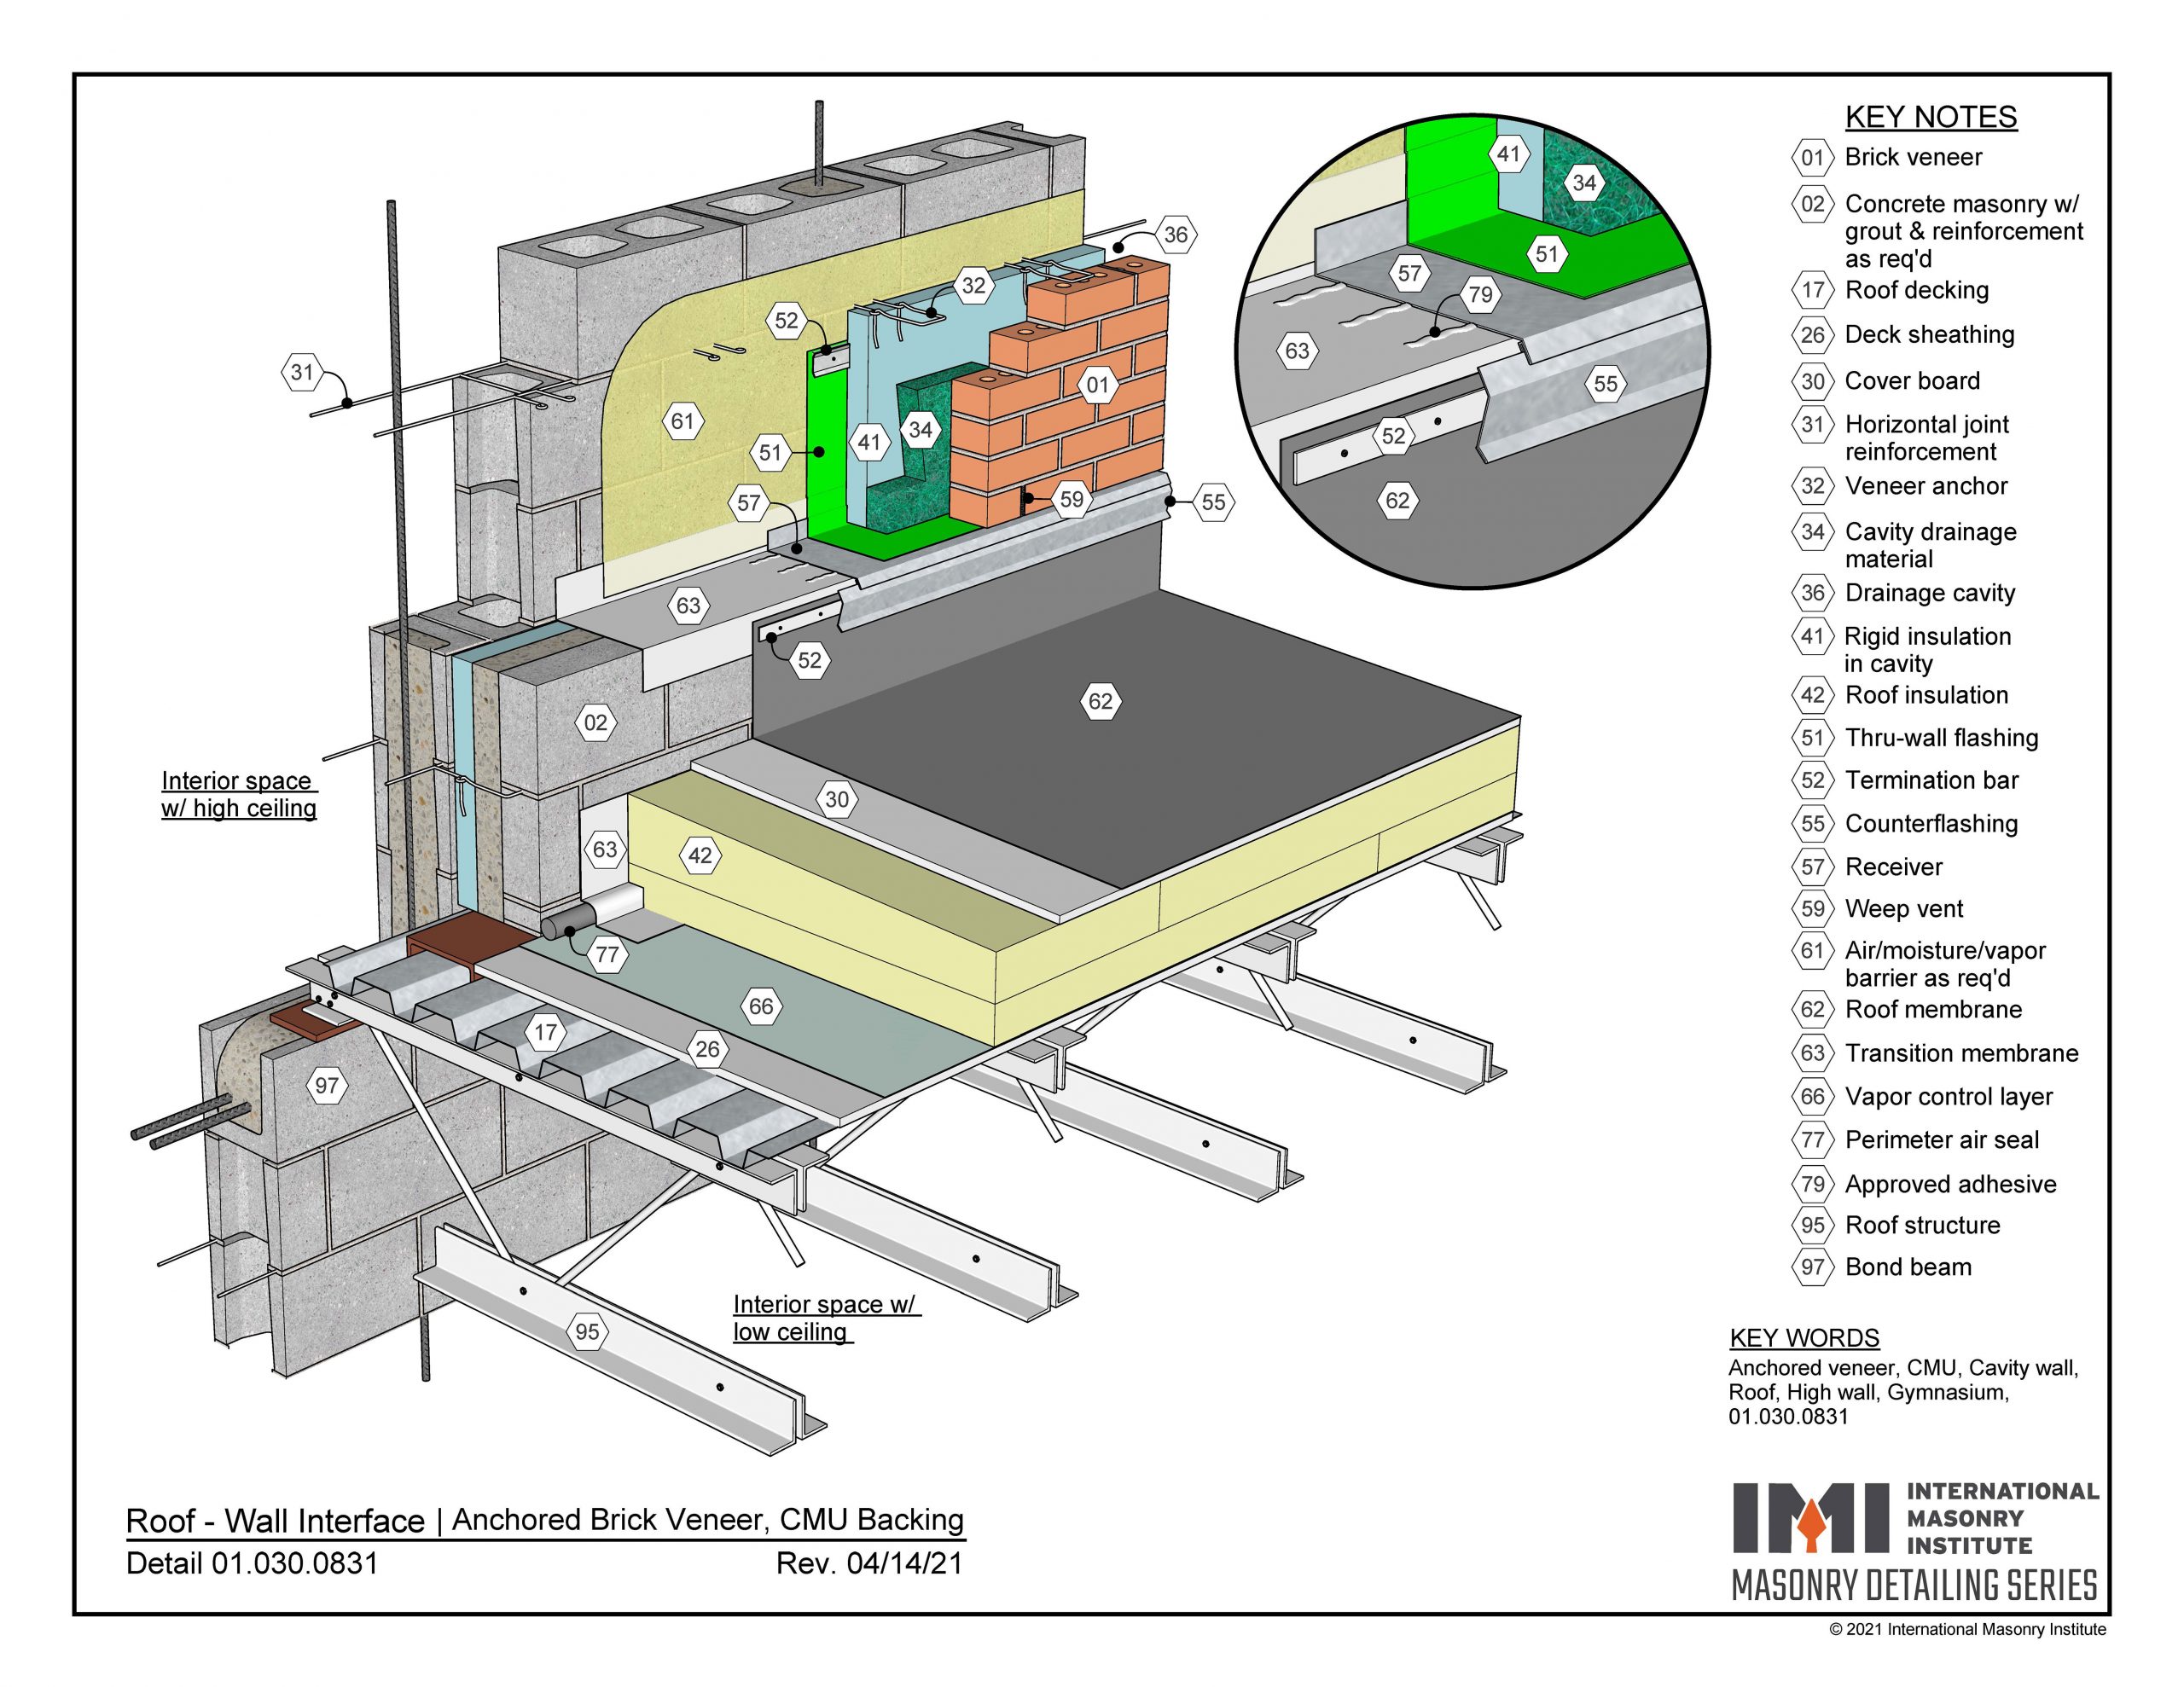 Roof wall interface: anchored brick veneer with CMU backing